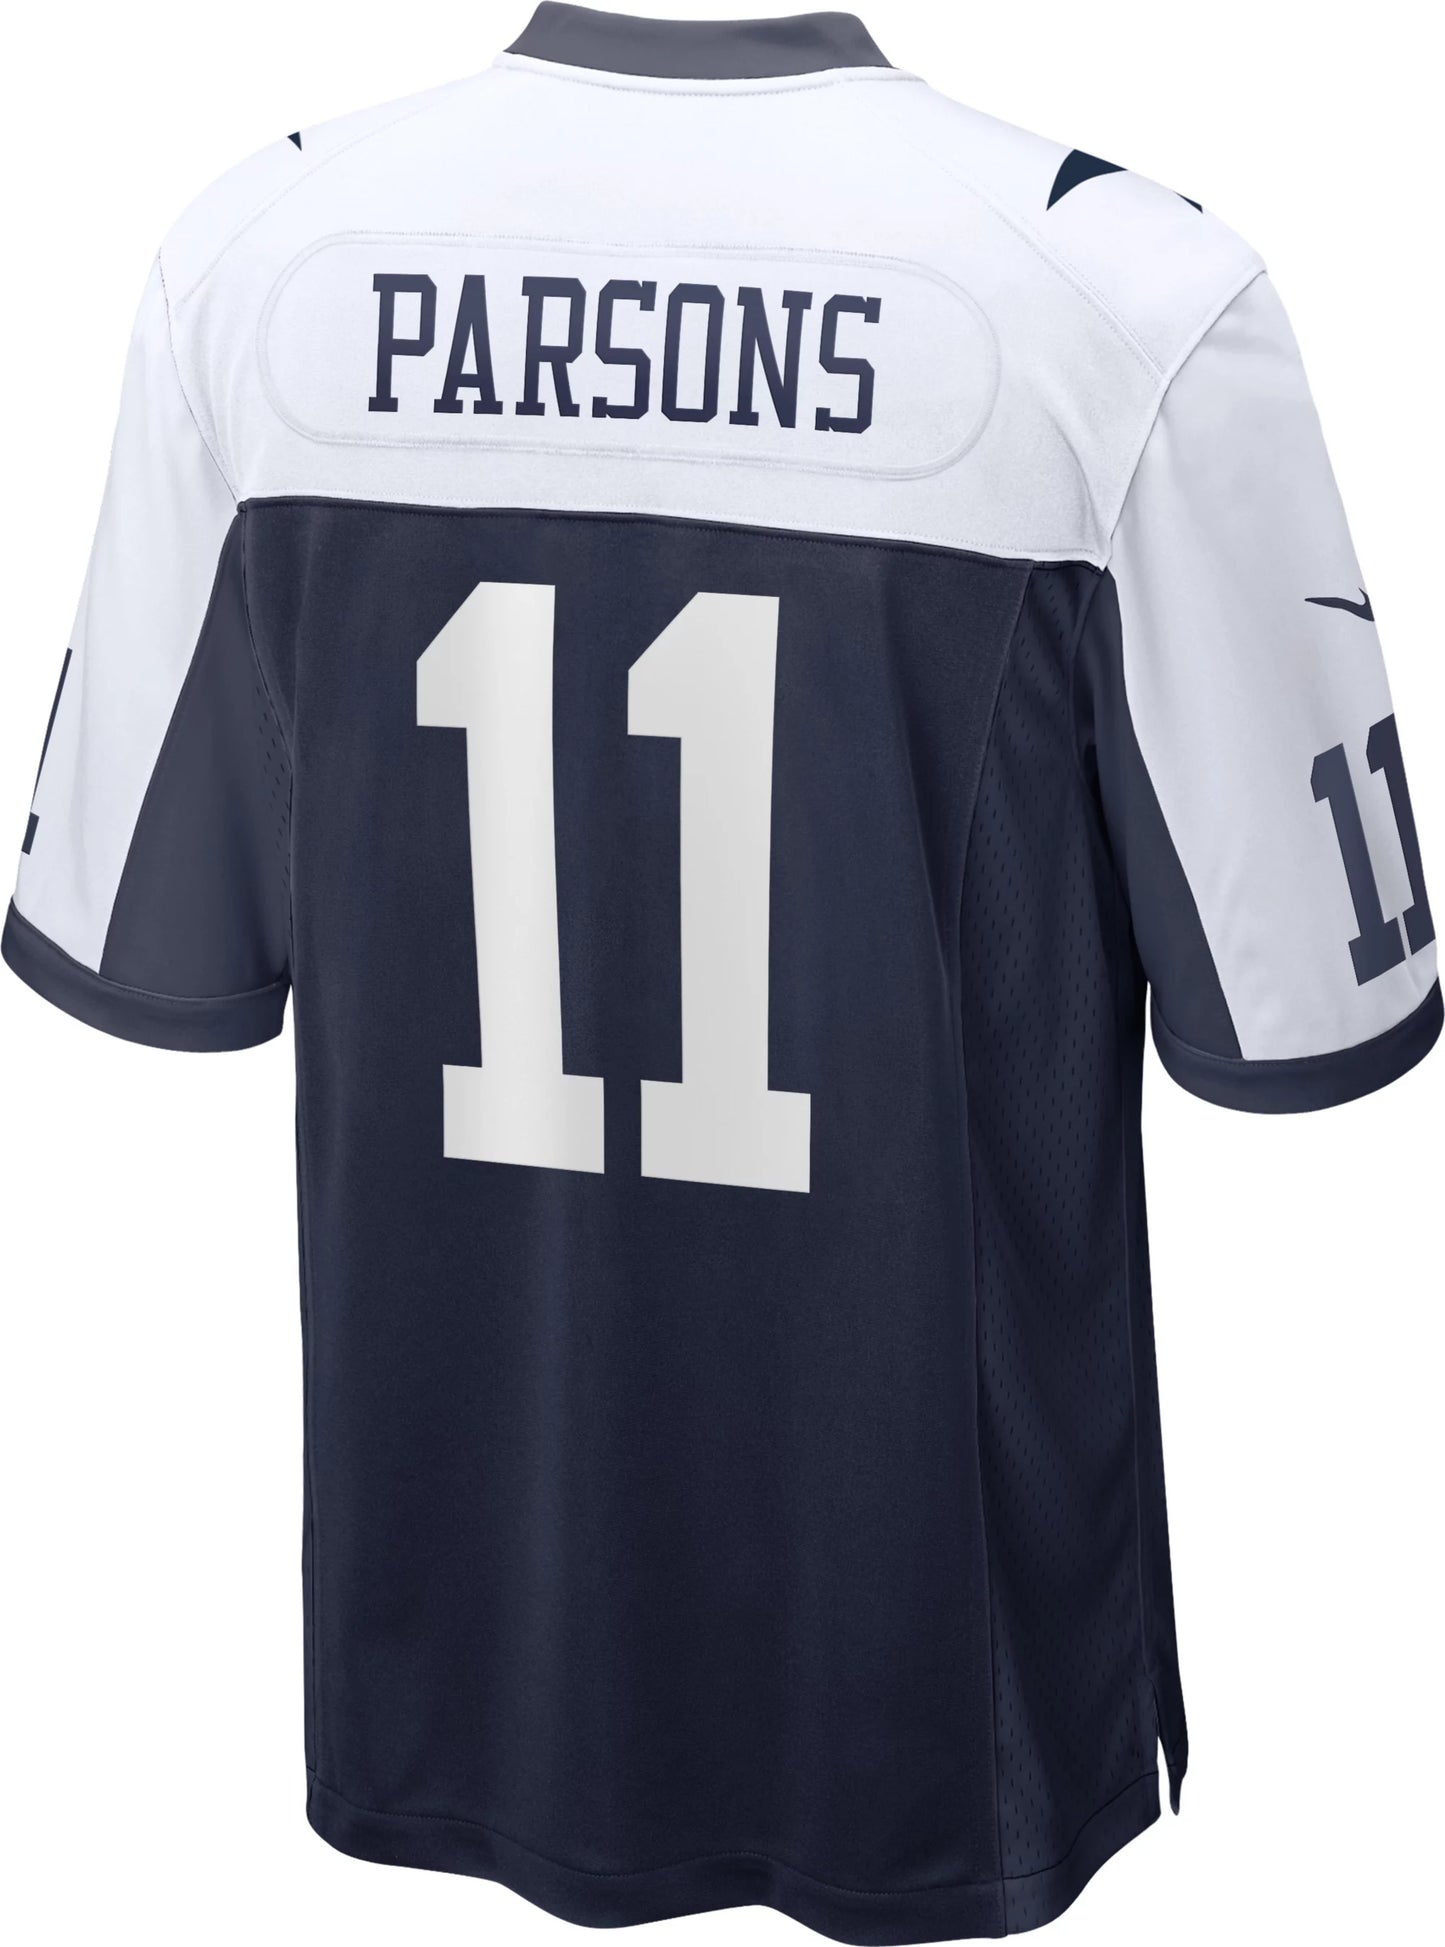 Men's Nike Micah Parsons Navy Alternate Dallas Cowboys Game Jersey